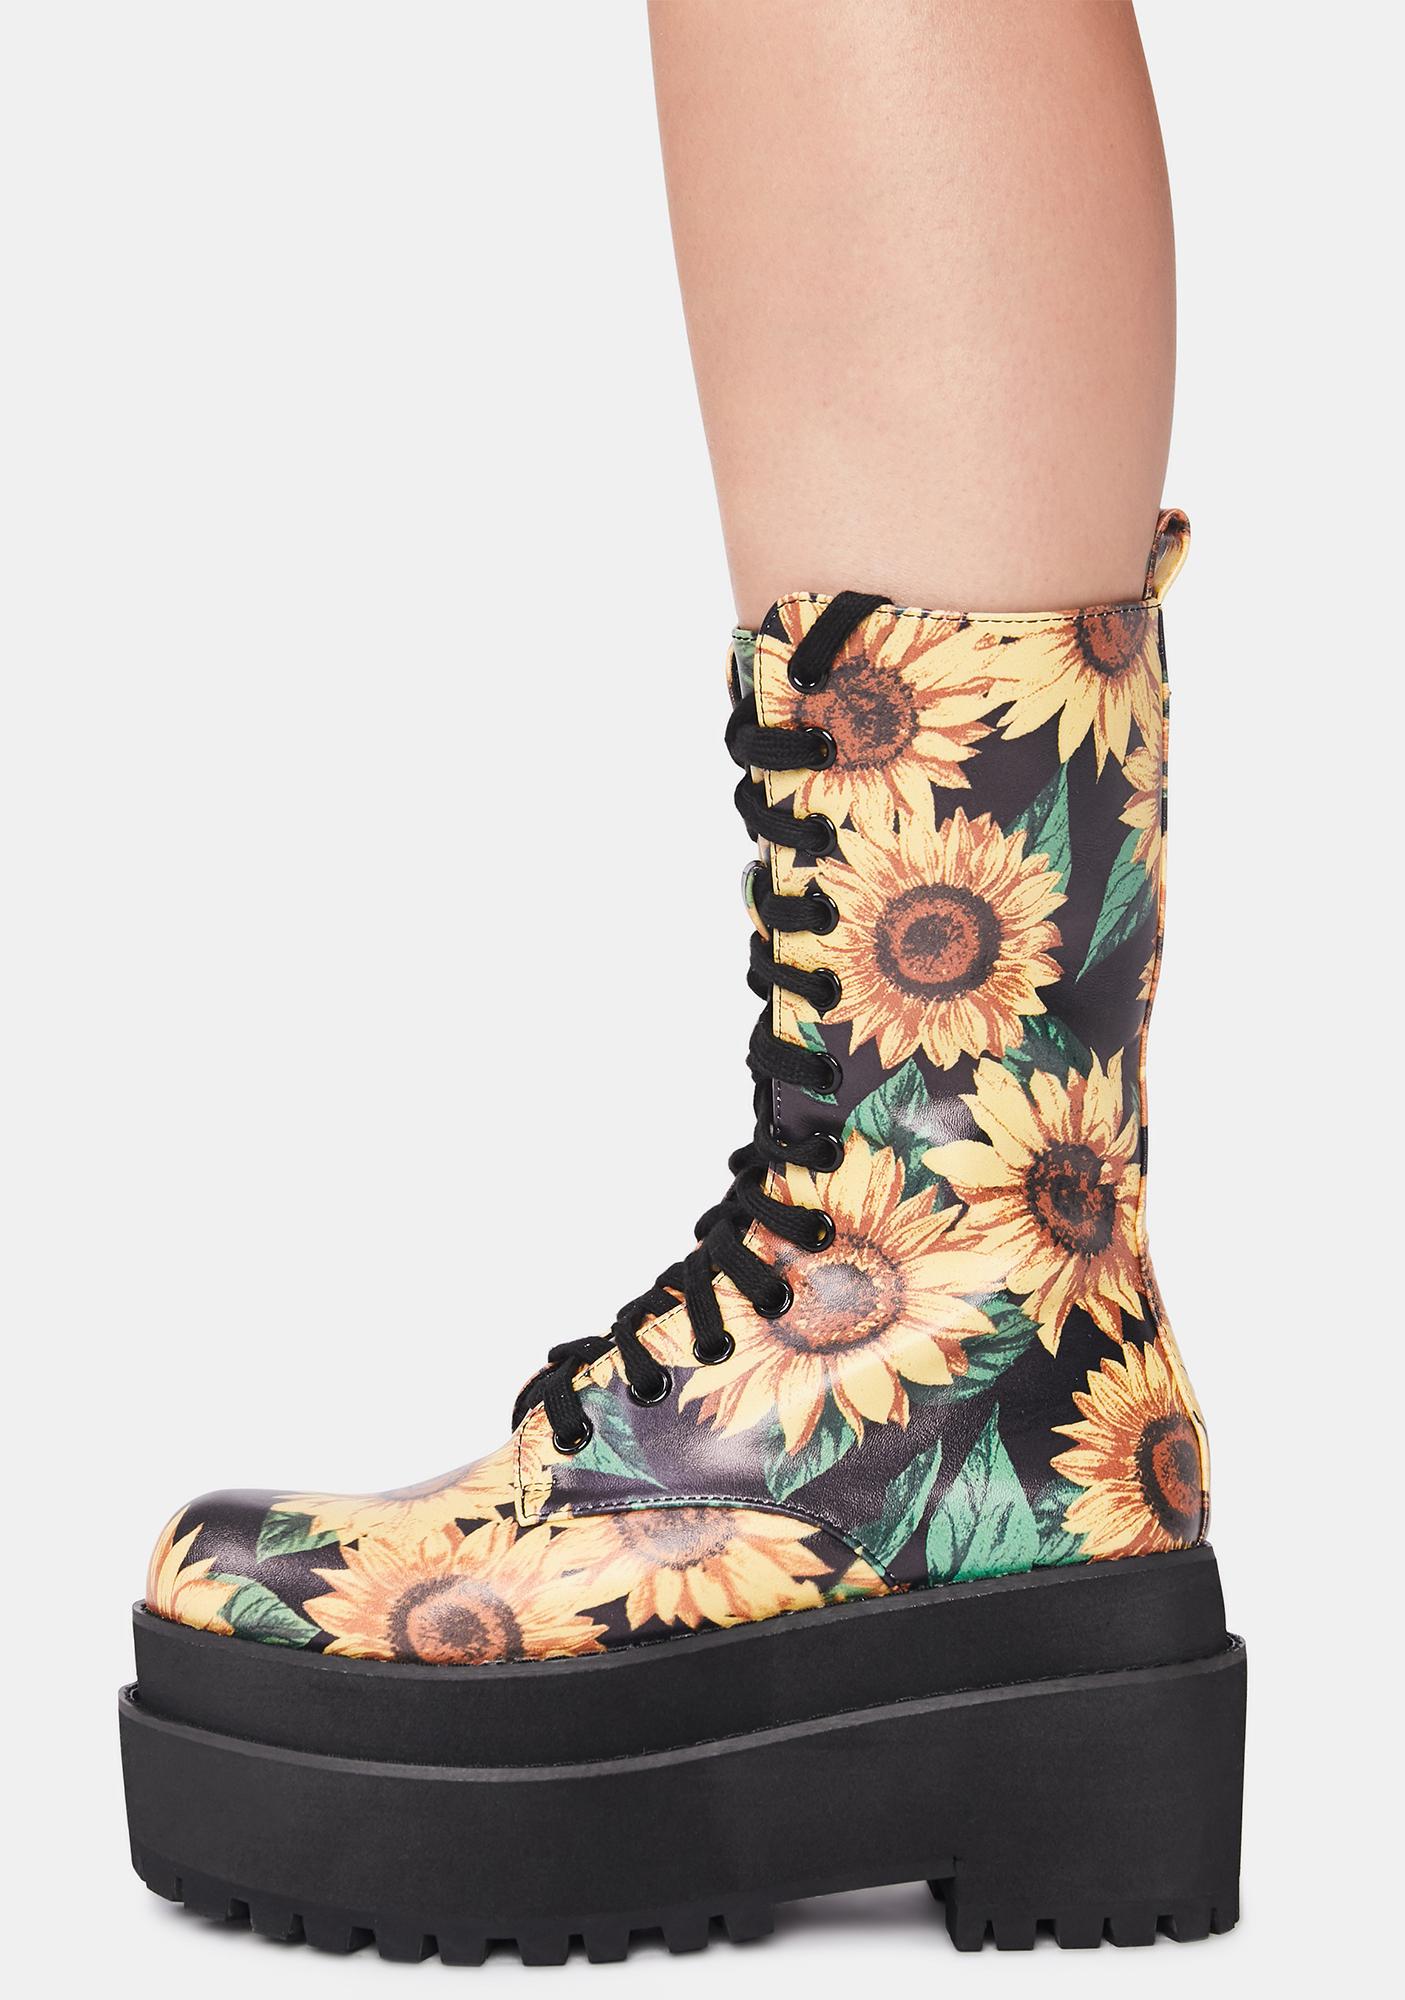 sunflower combat boots